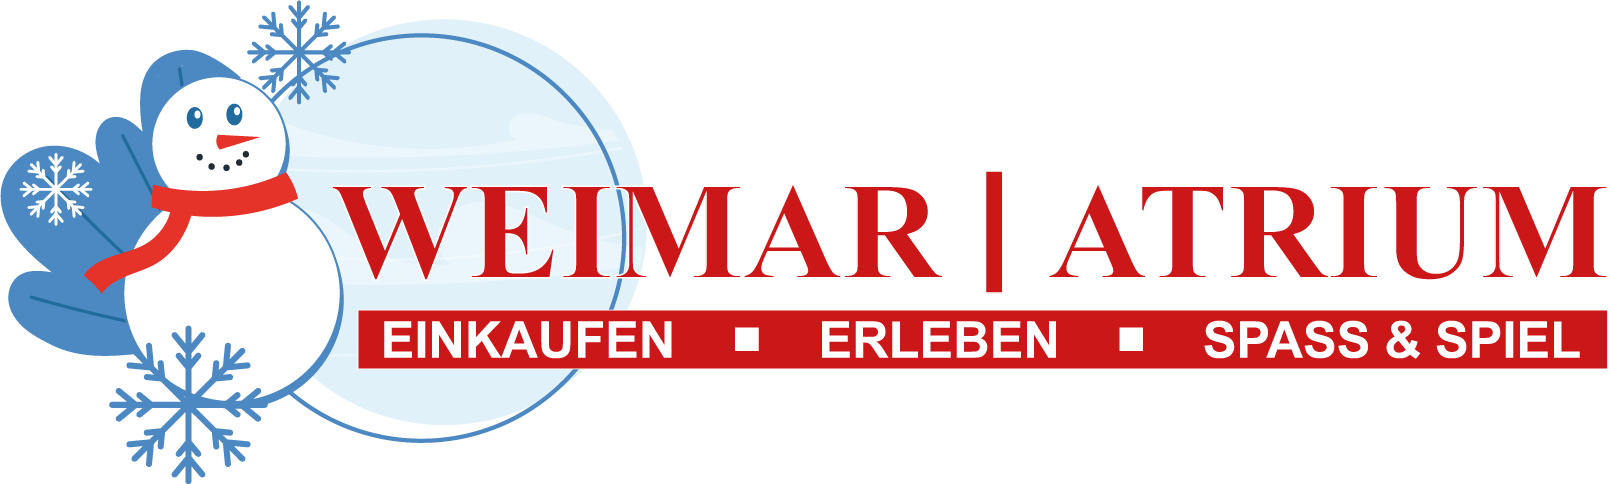 Weimar Atrium Logo